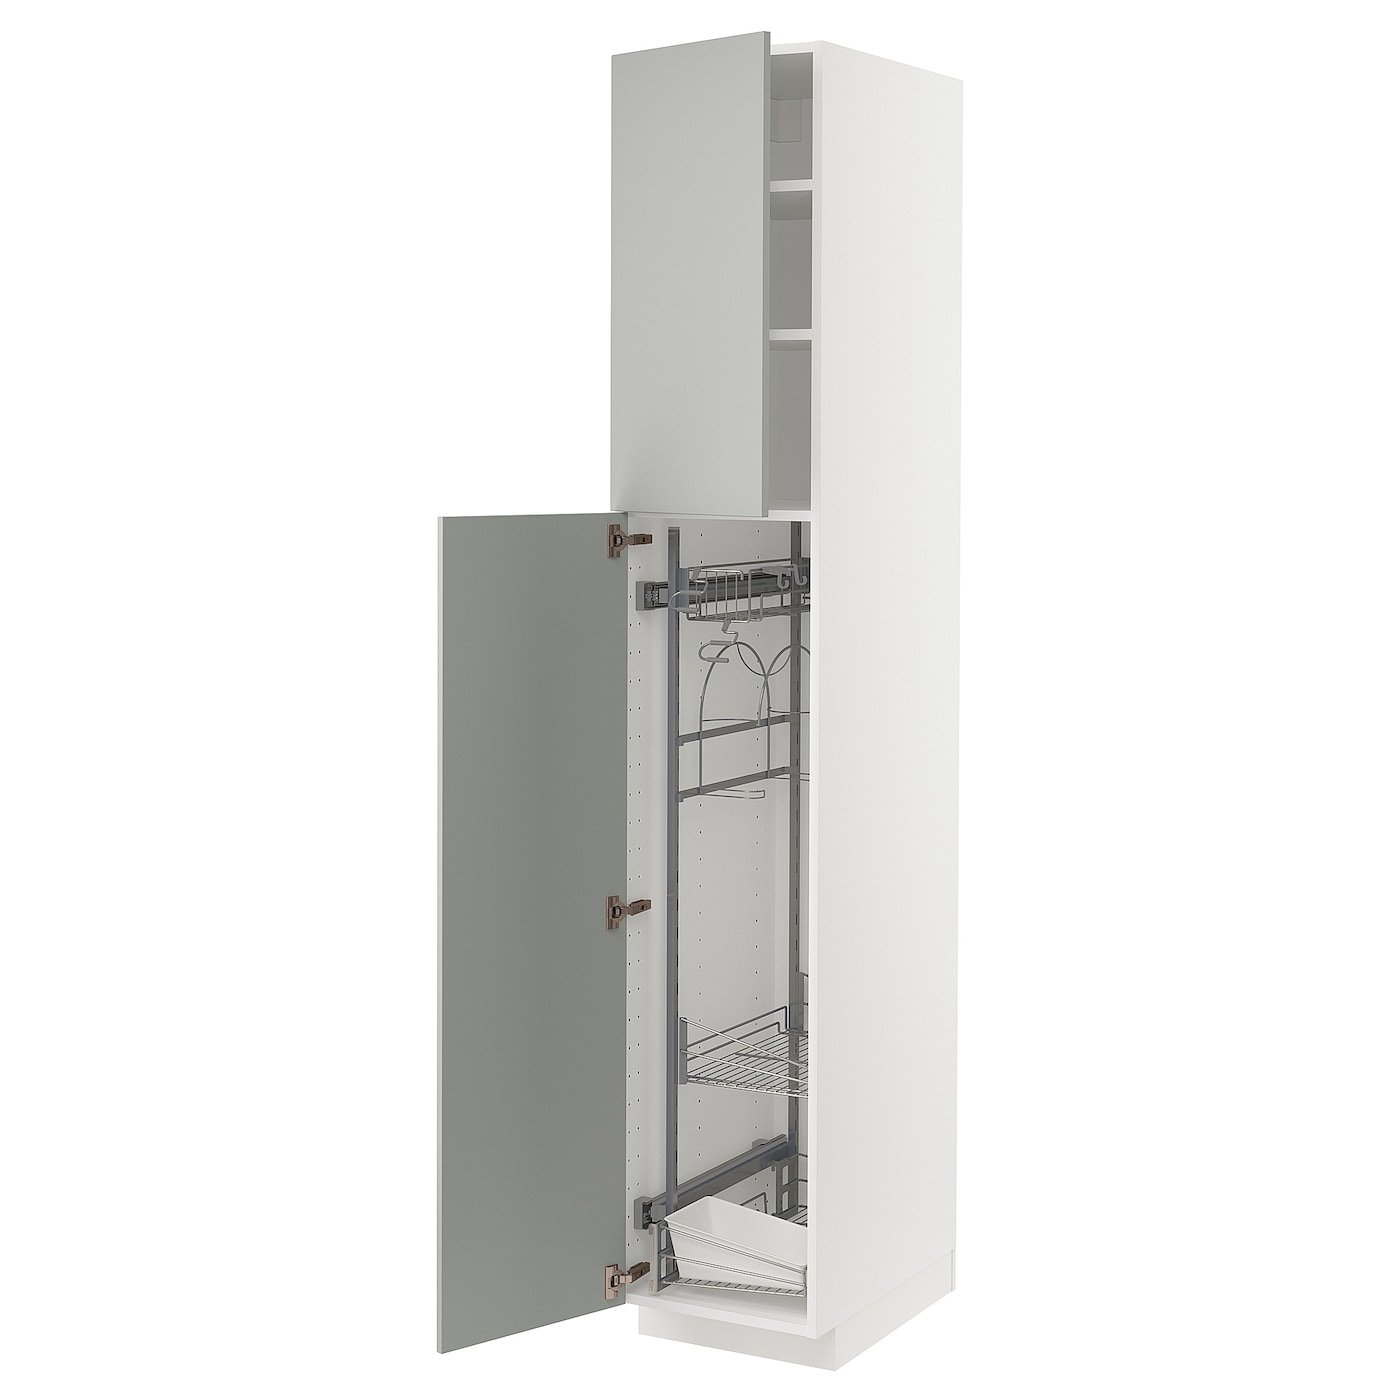 Высокий кухонный шкаф/бытовой - IKEA METOD/МЕТОД ИКЕА, 220х60х40 см, белый/серый